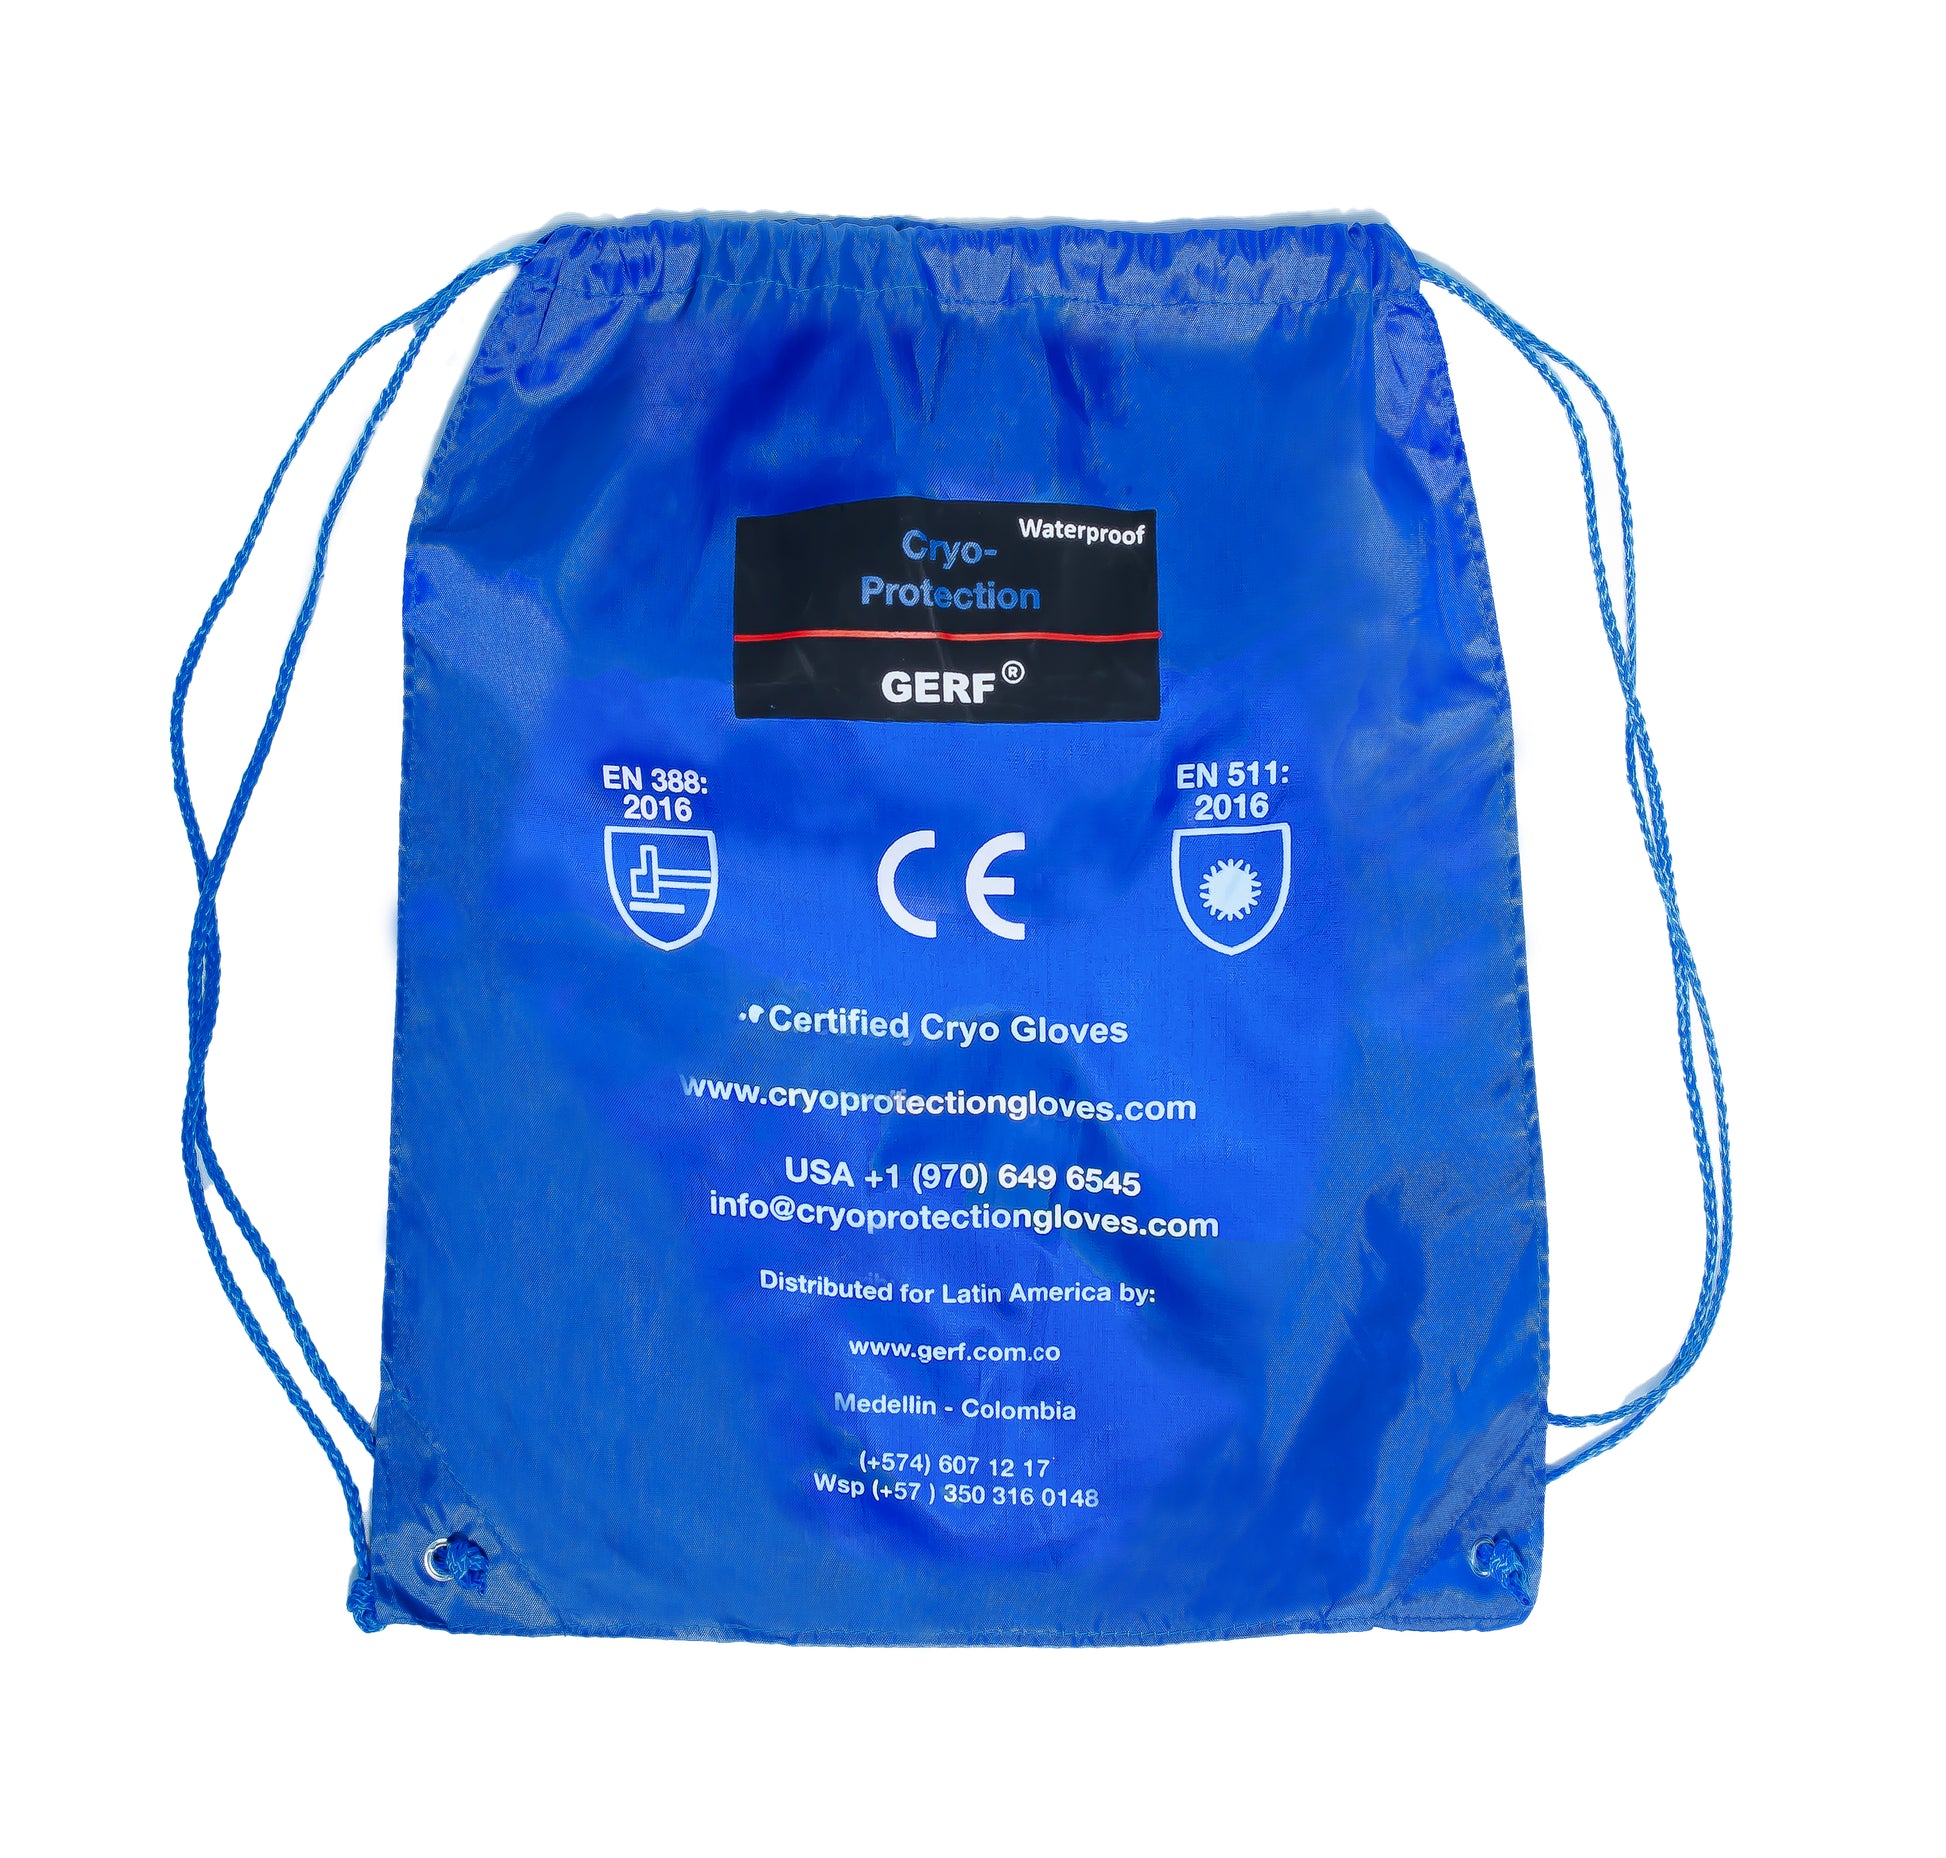 Waterproof Cryo Shoulder Protector - GERF® Certified Safety Gloves